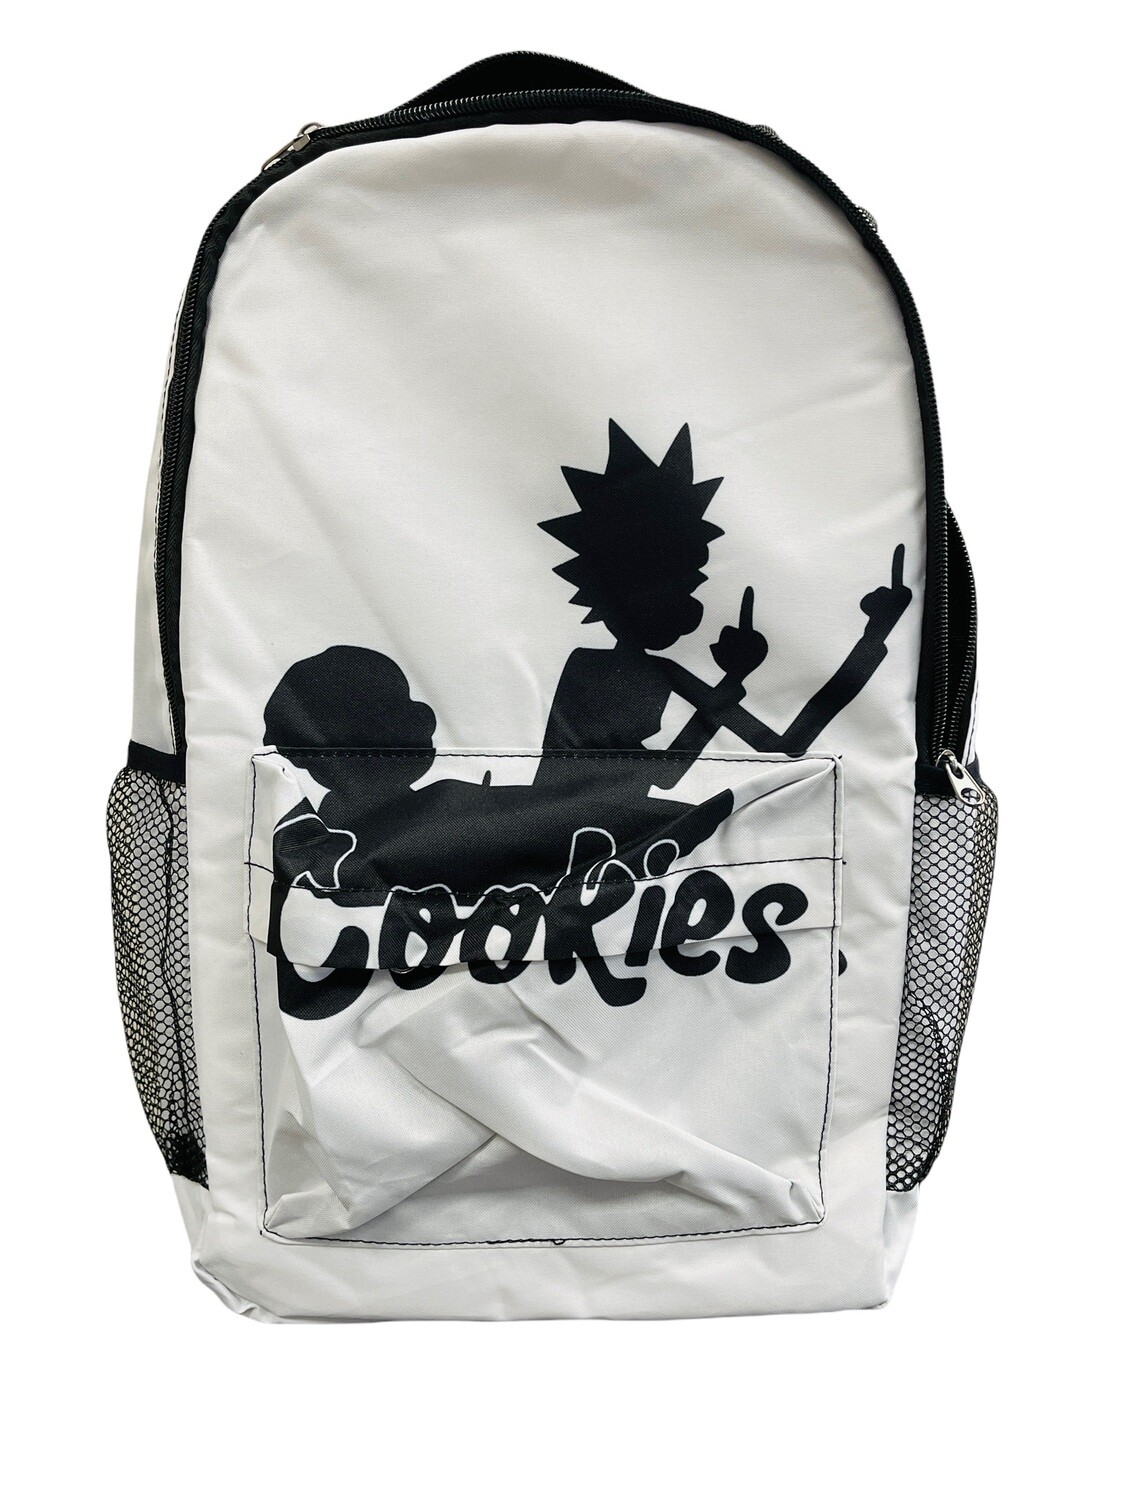 White Cookies Odor Free Backpack